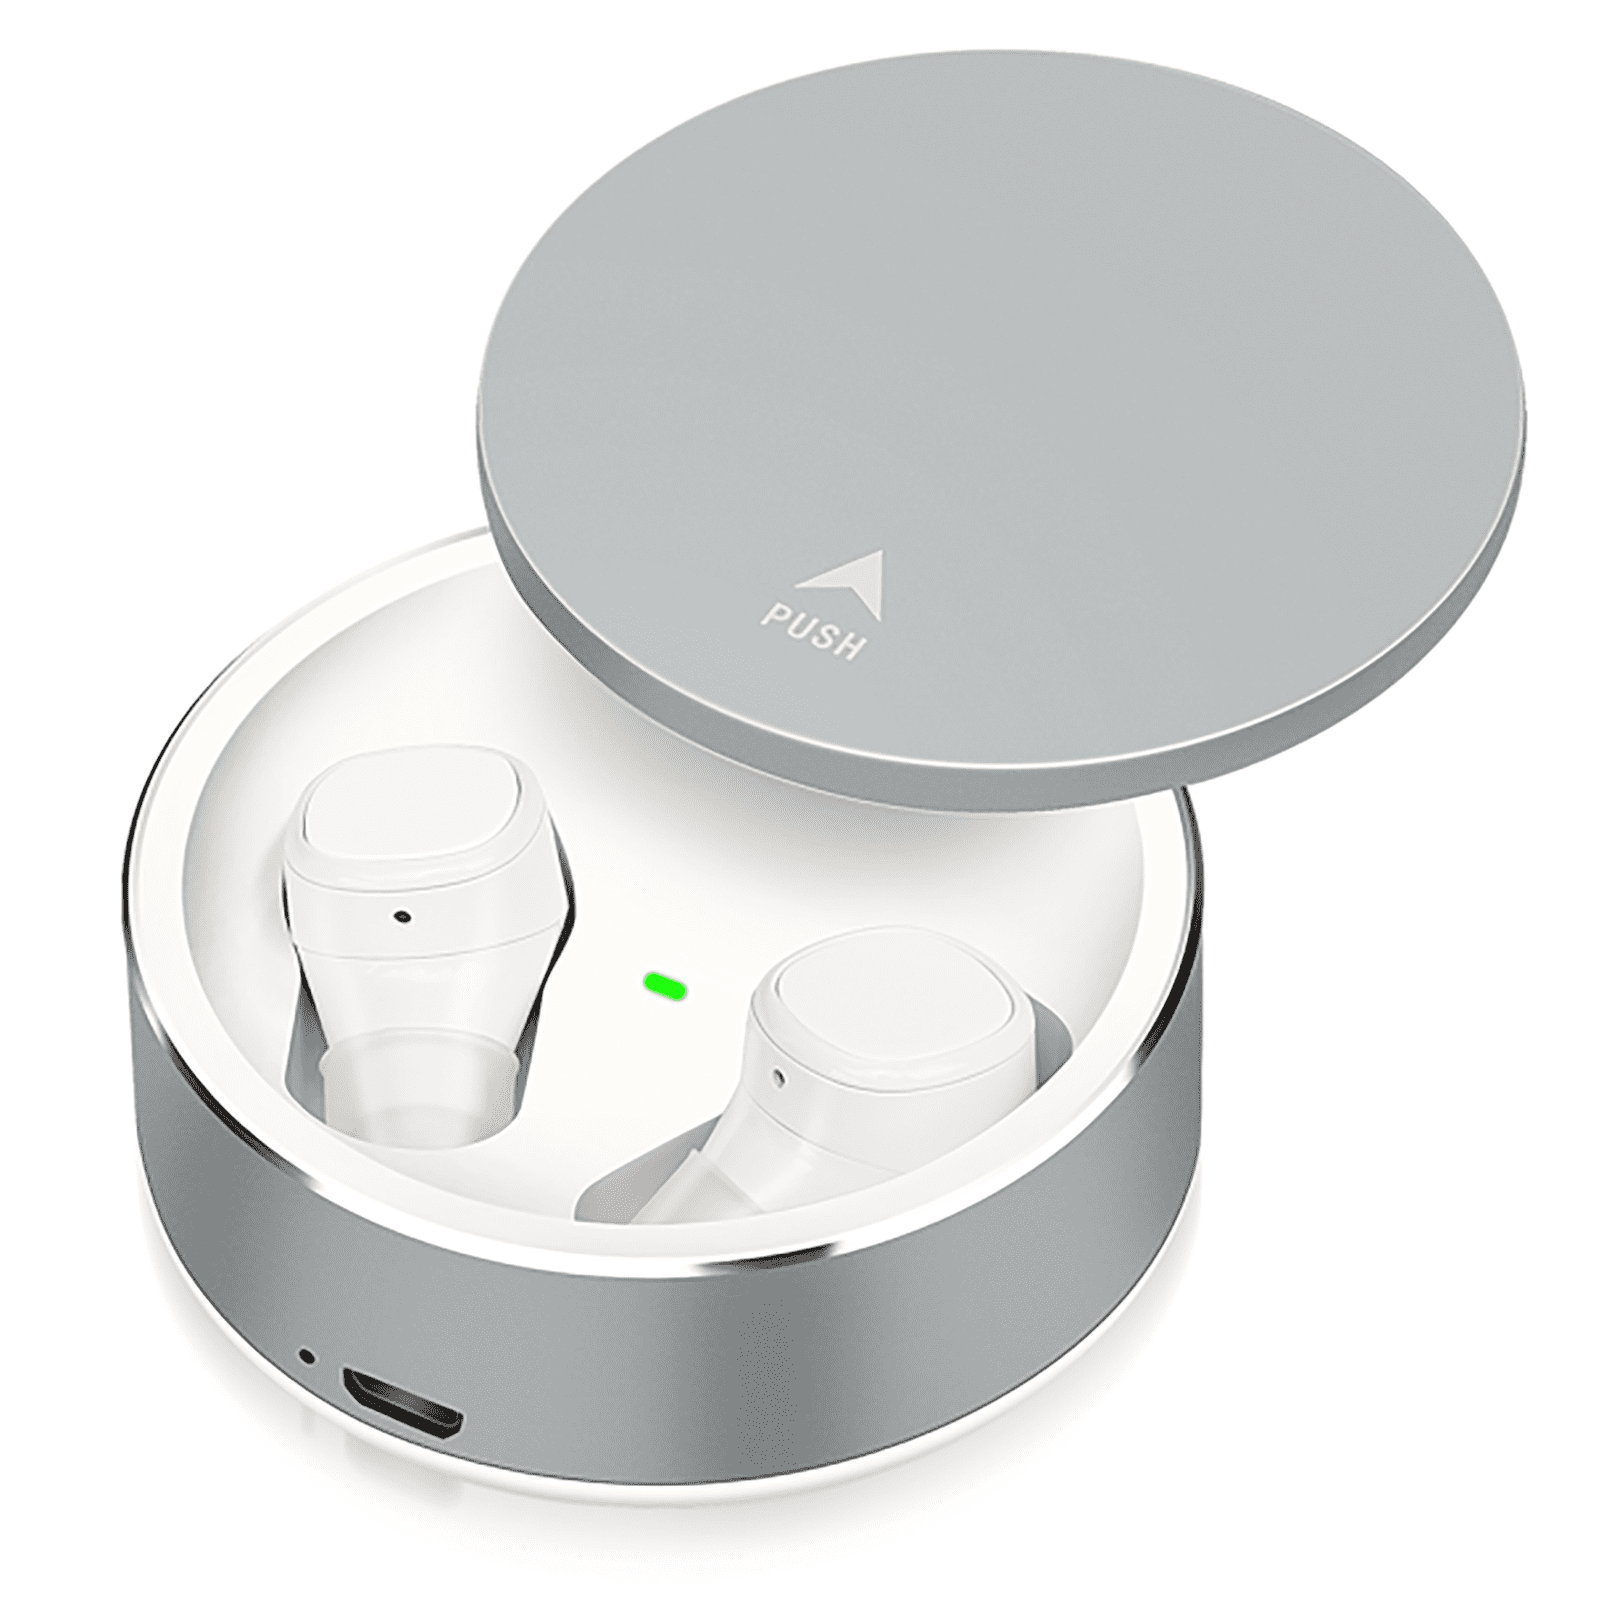 iLive Lights Out Bluetooth Wireless Sleep Mask Headphones, IAHB33G, Gray